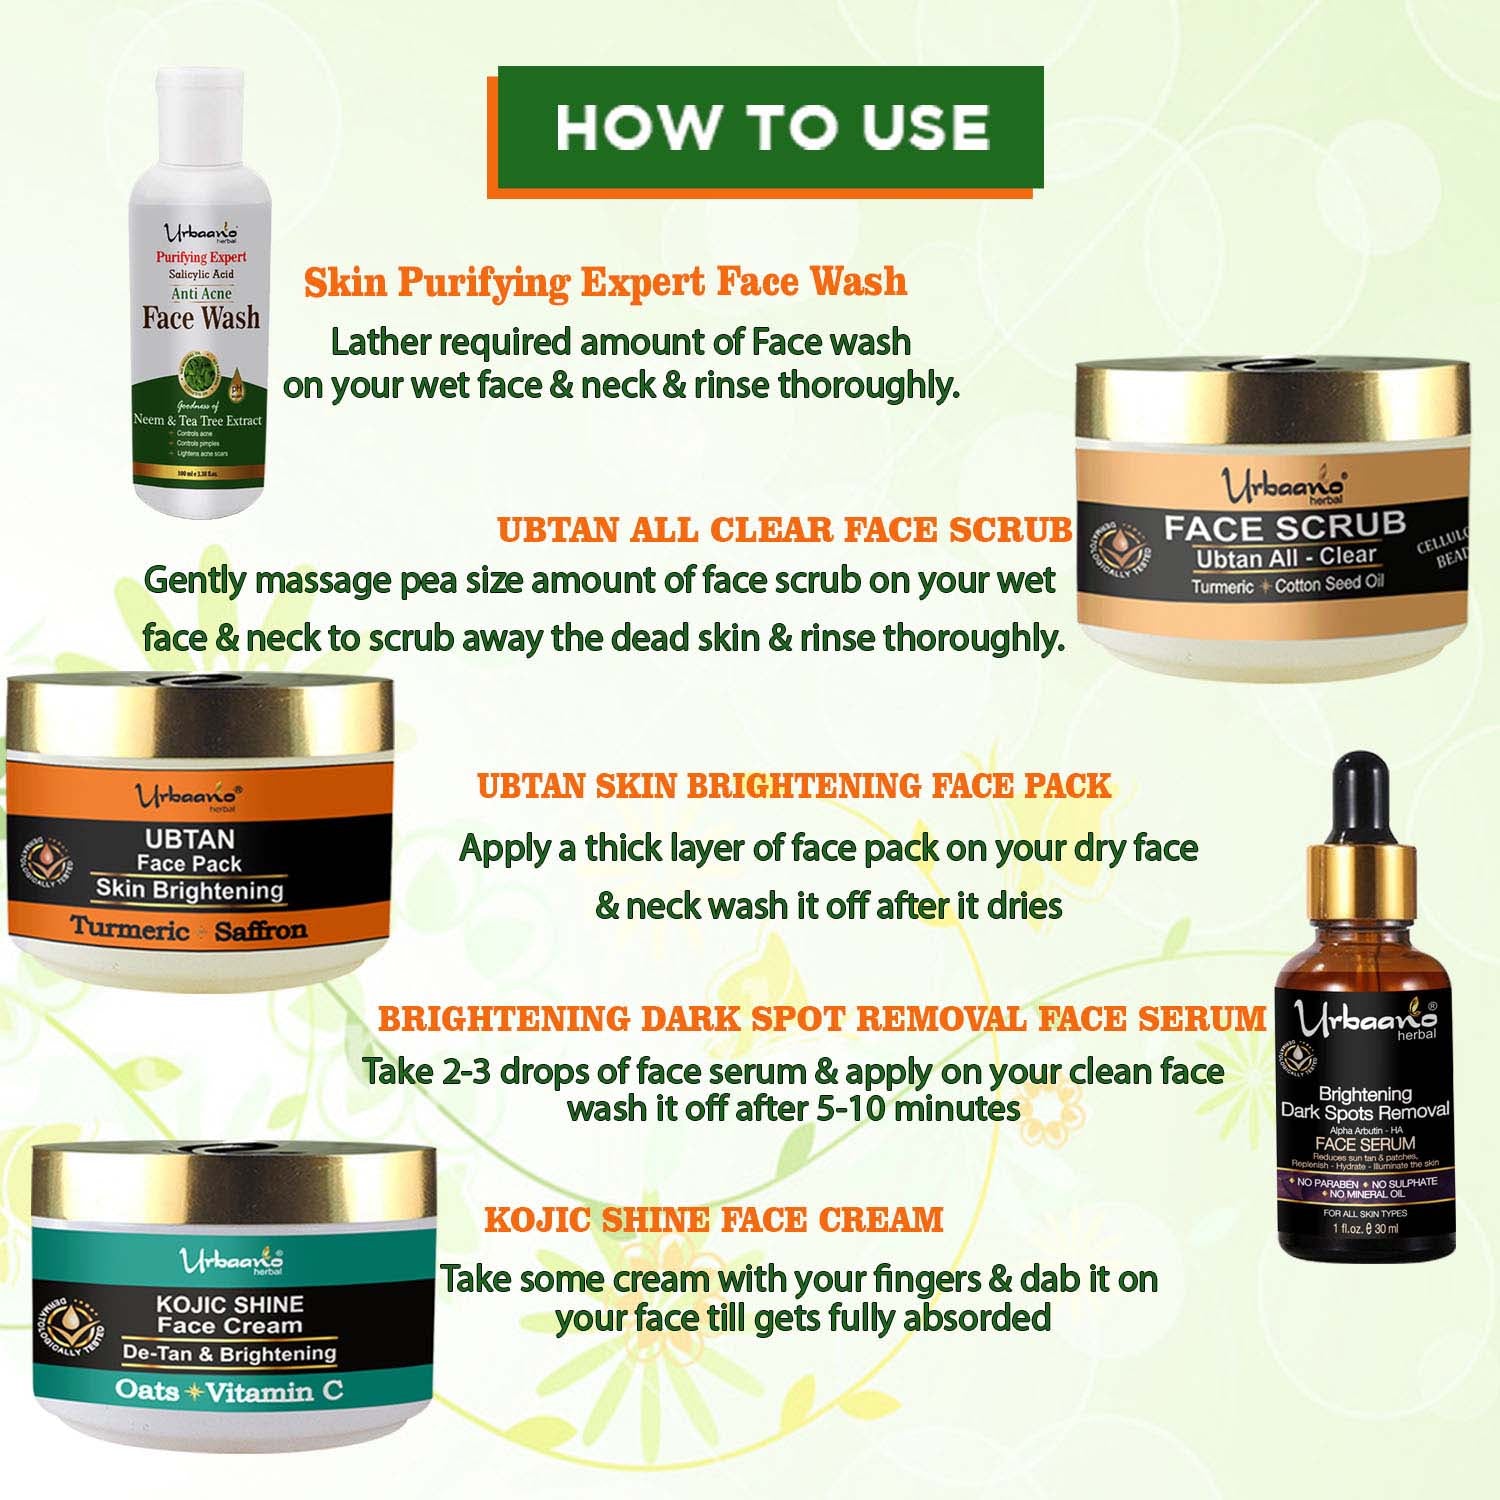 urbaano herbal de tan anti acne facial kit for bright glow anti acne face wash, scrub, pack, cream, serum easy to use in 5 steps